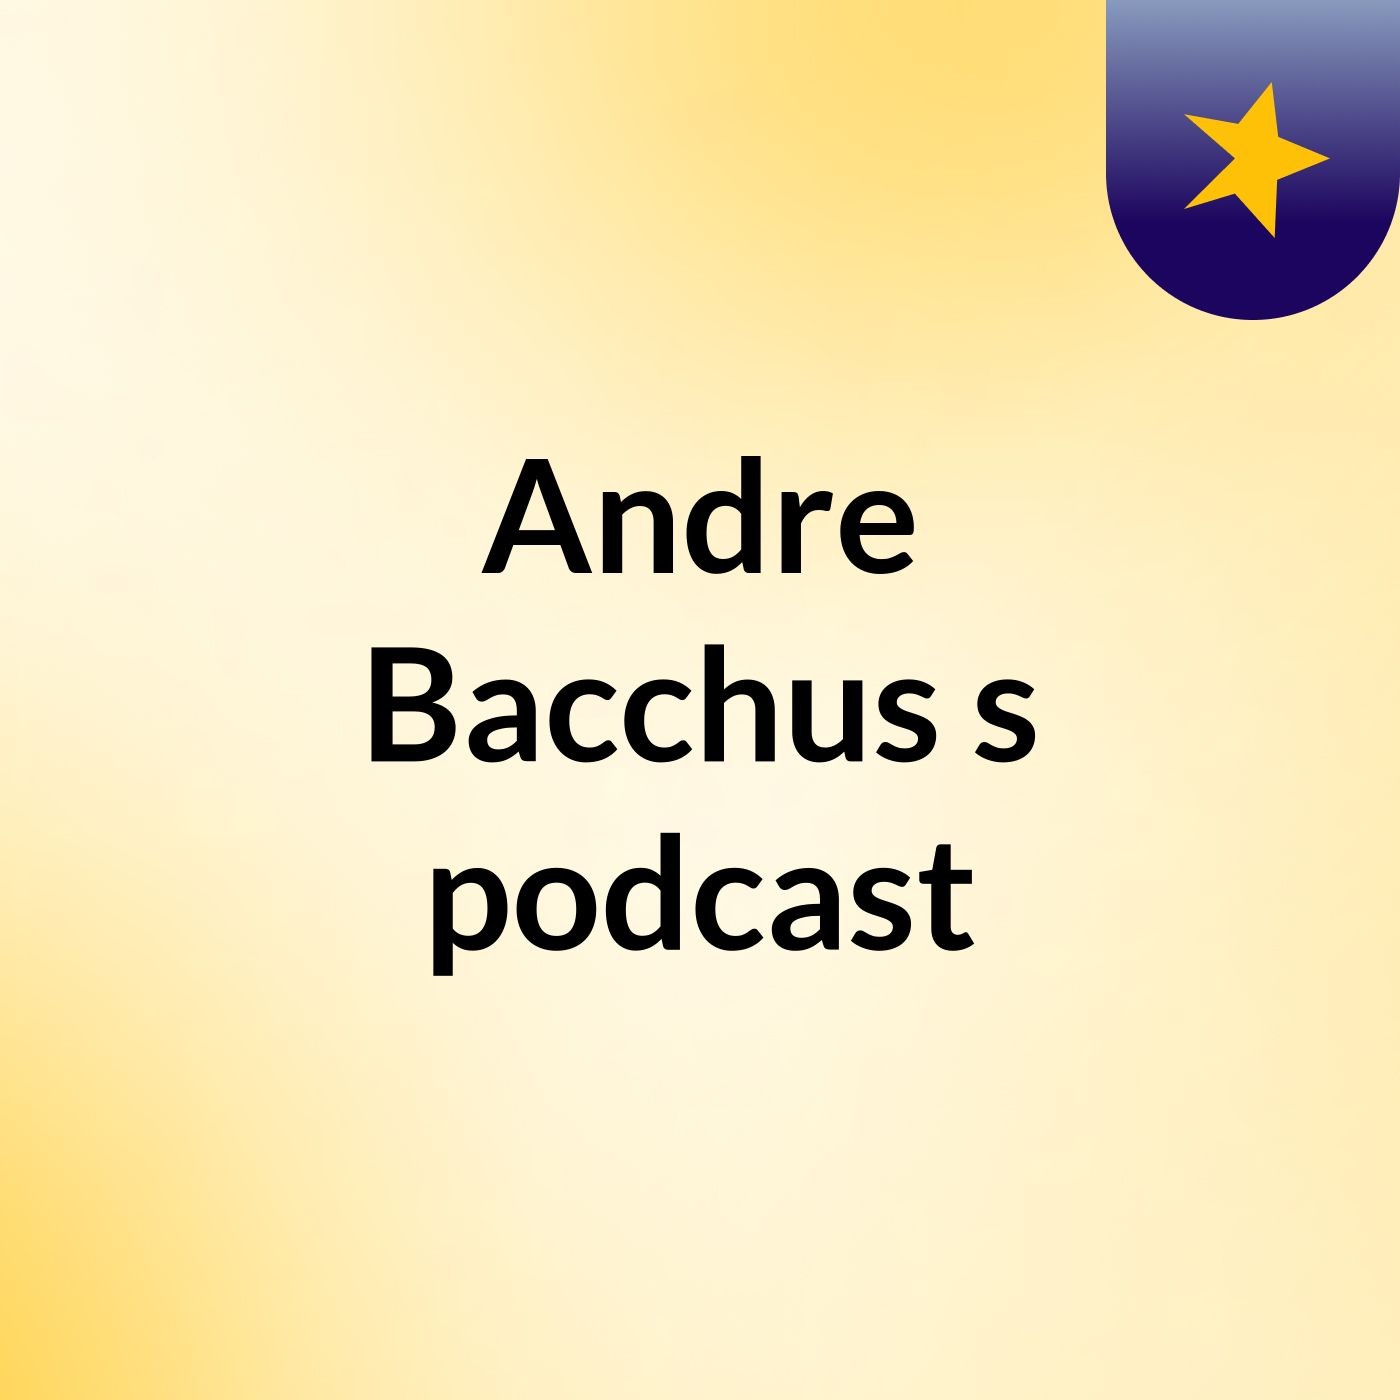 Episode 18 - Andre Bacchus's podcast